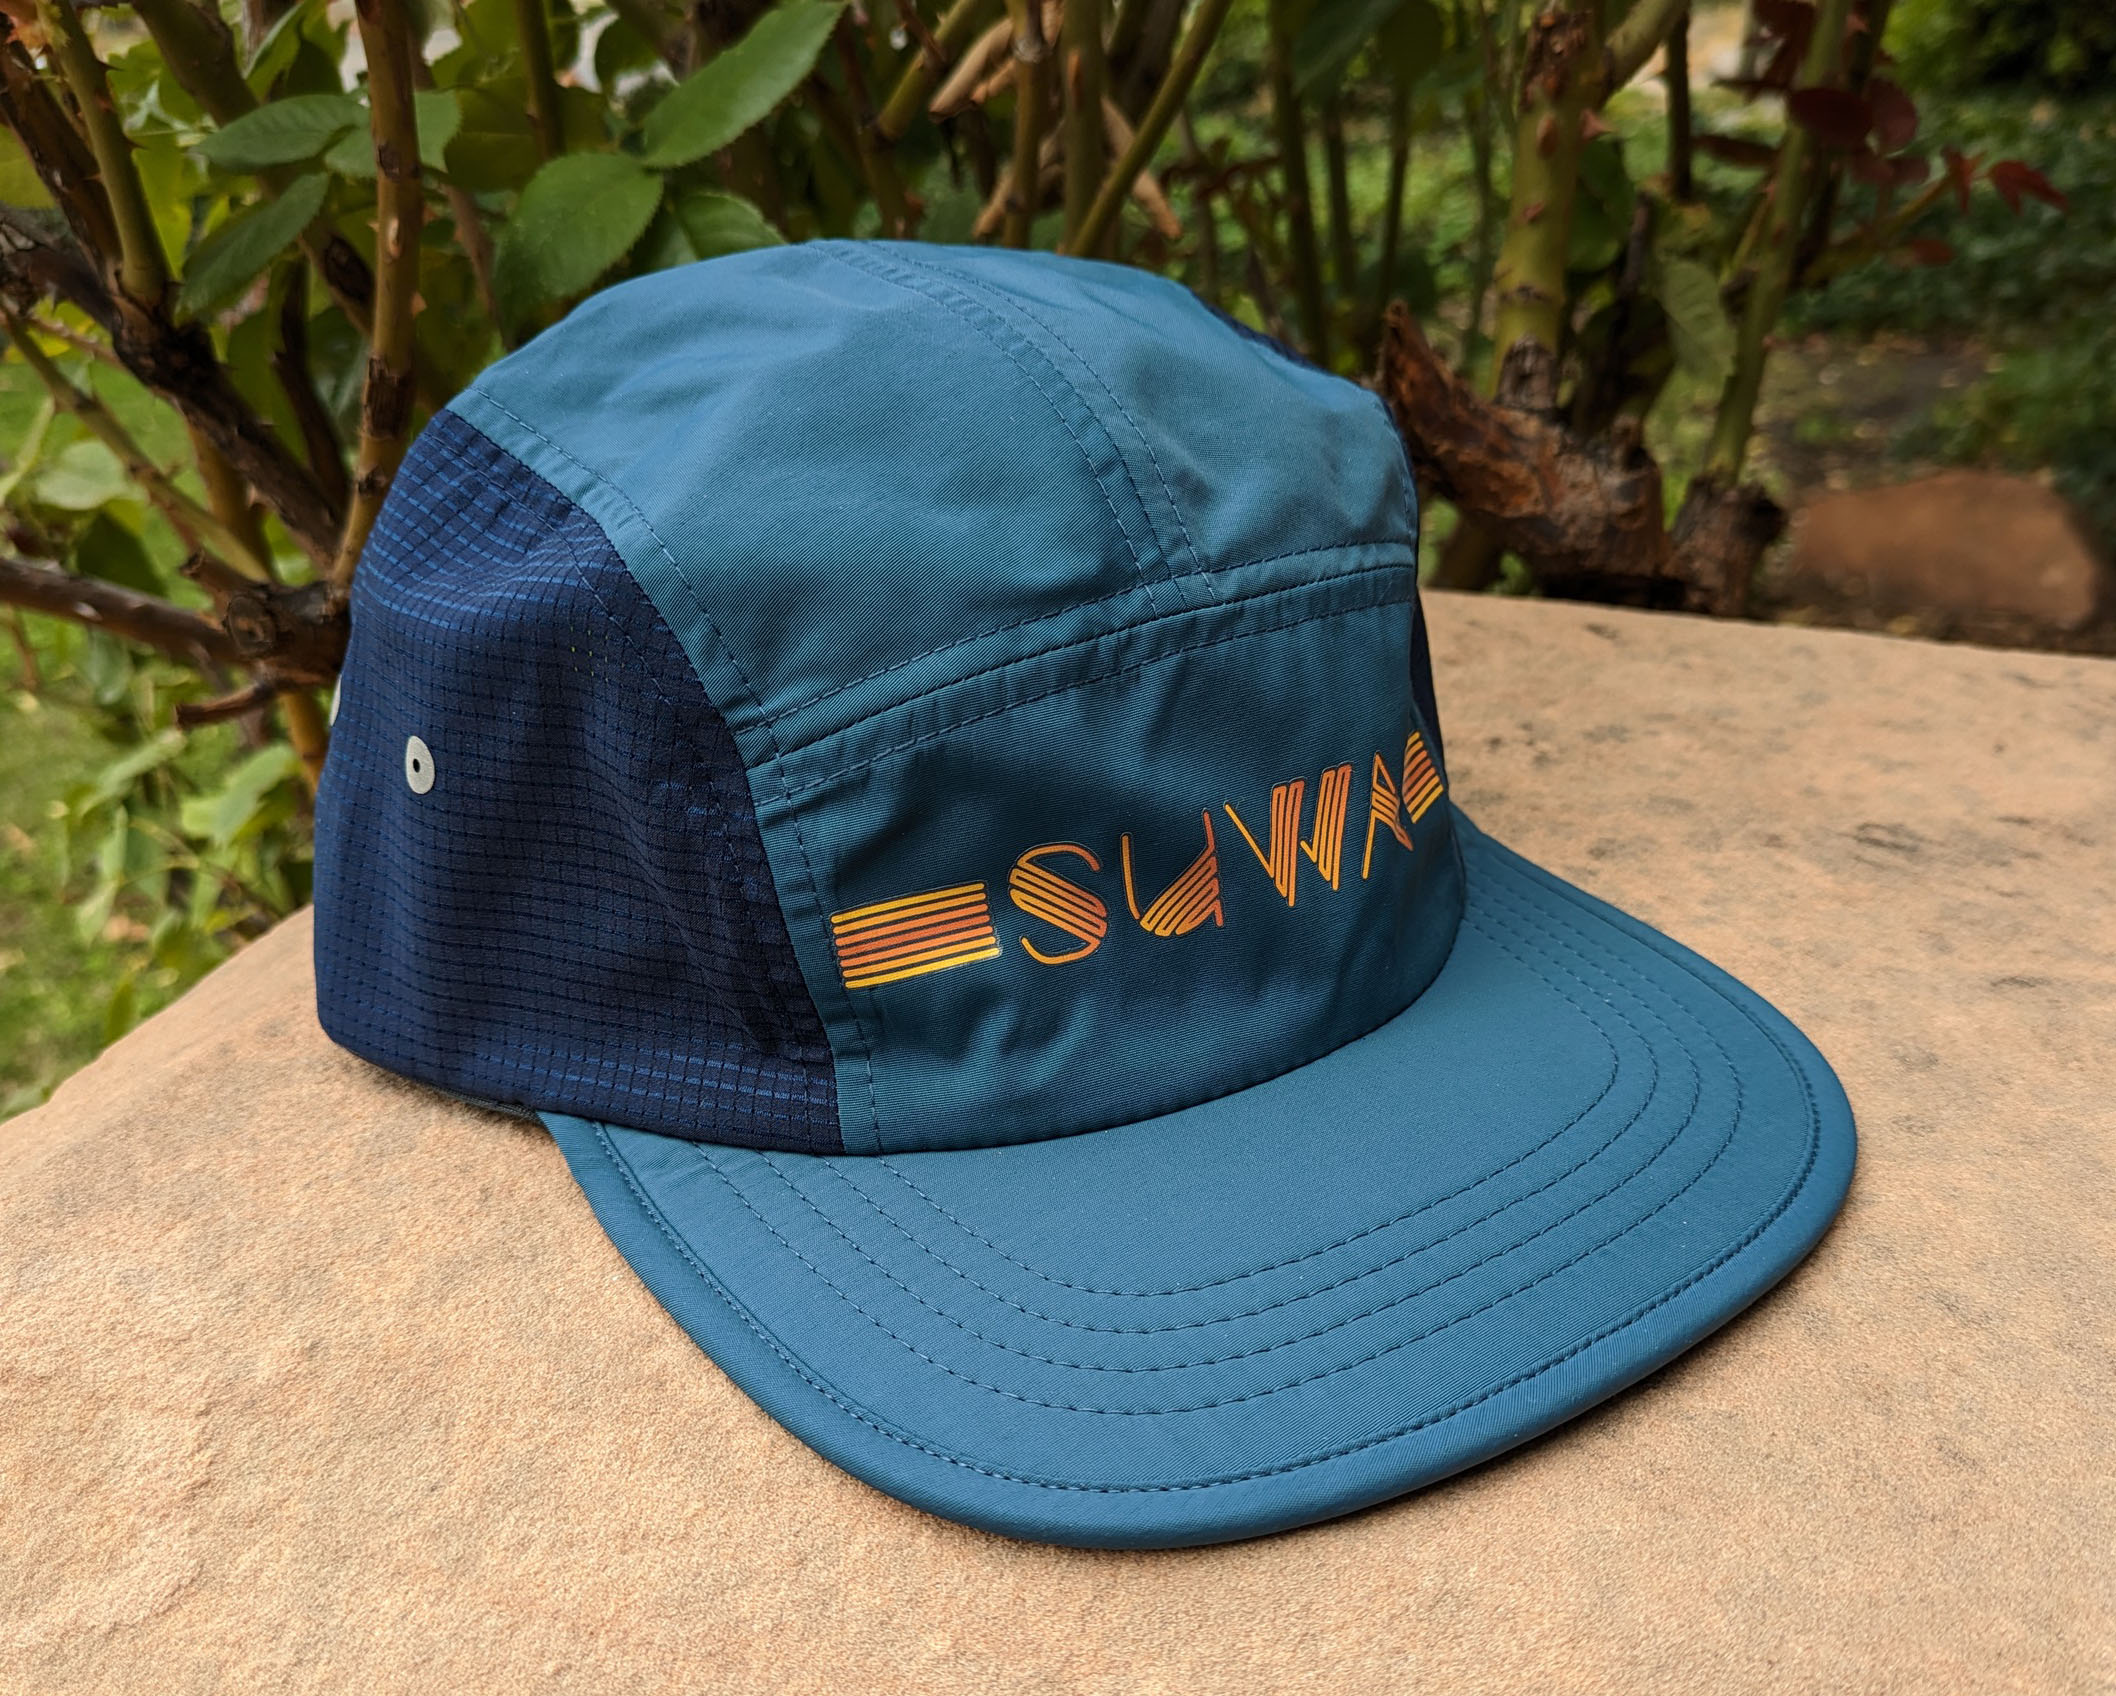 Printed SUWA cap